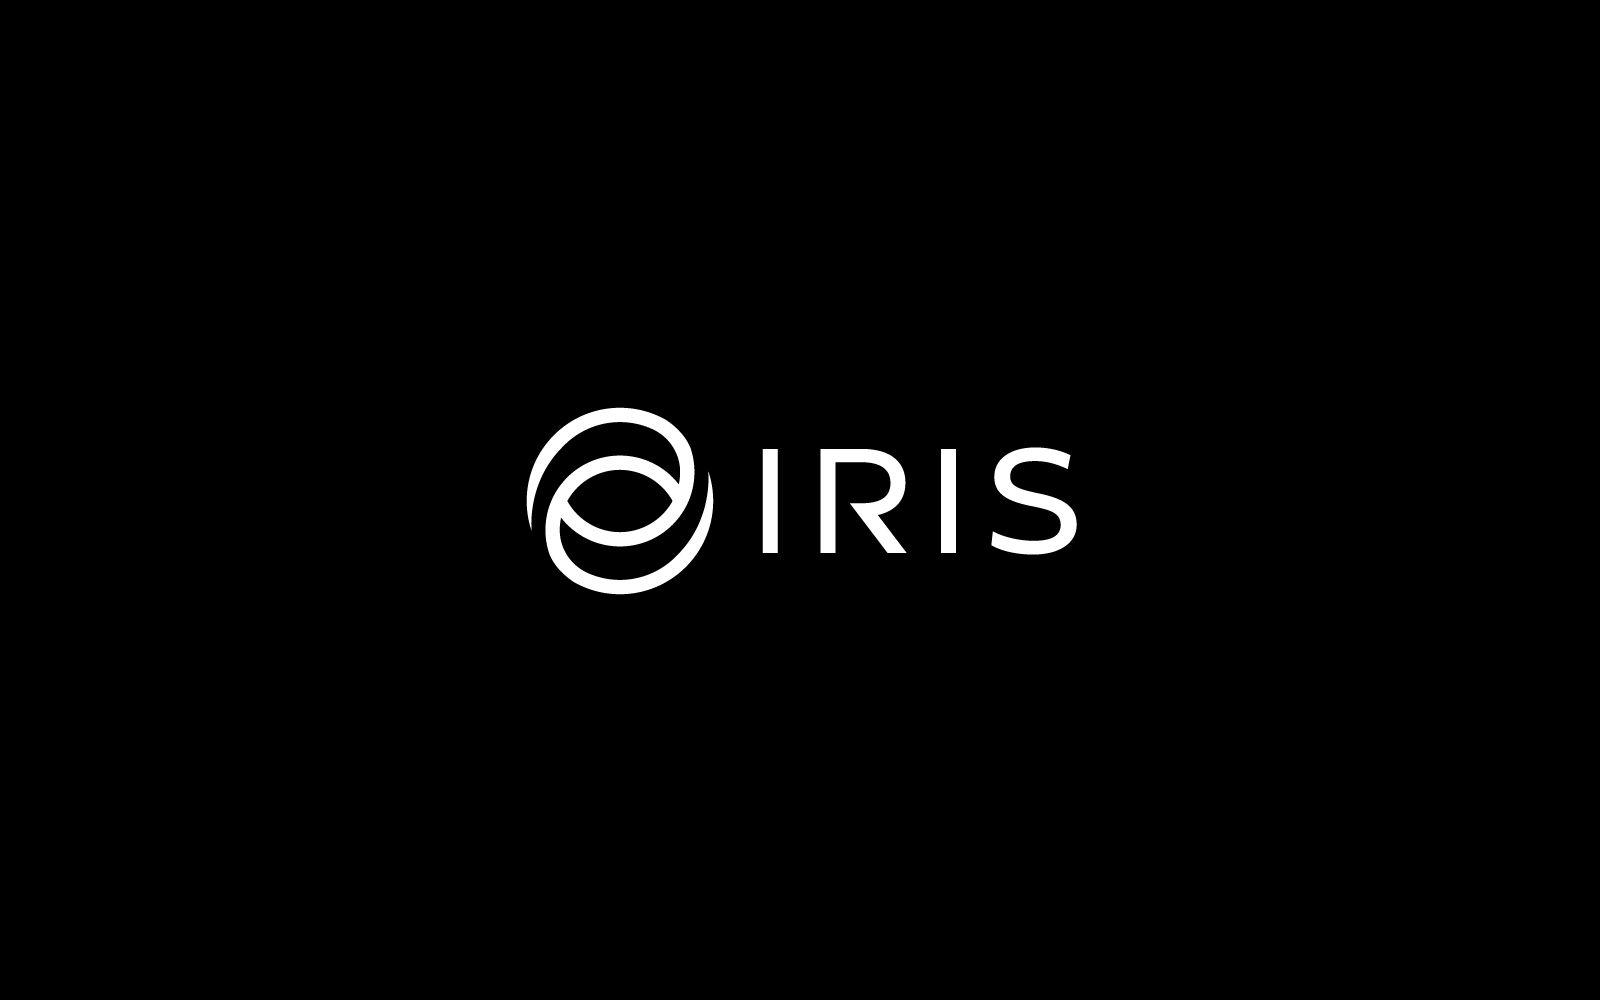 Iris Logo Design by Marian C. on Dribbble